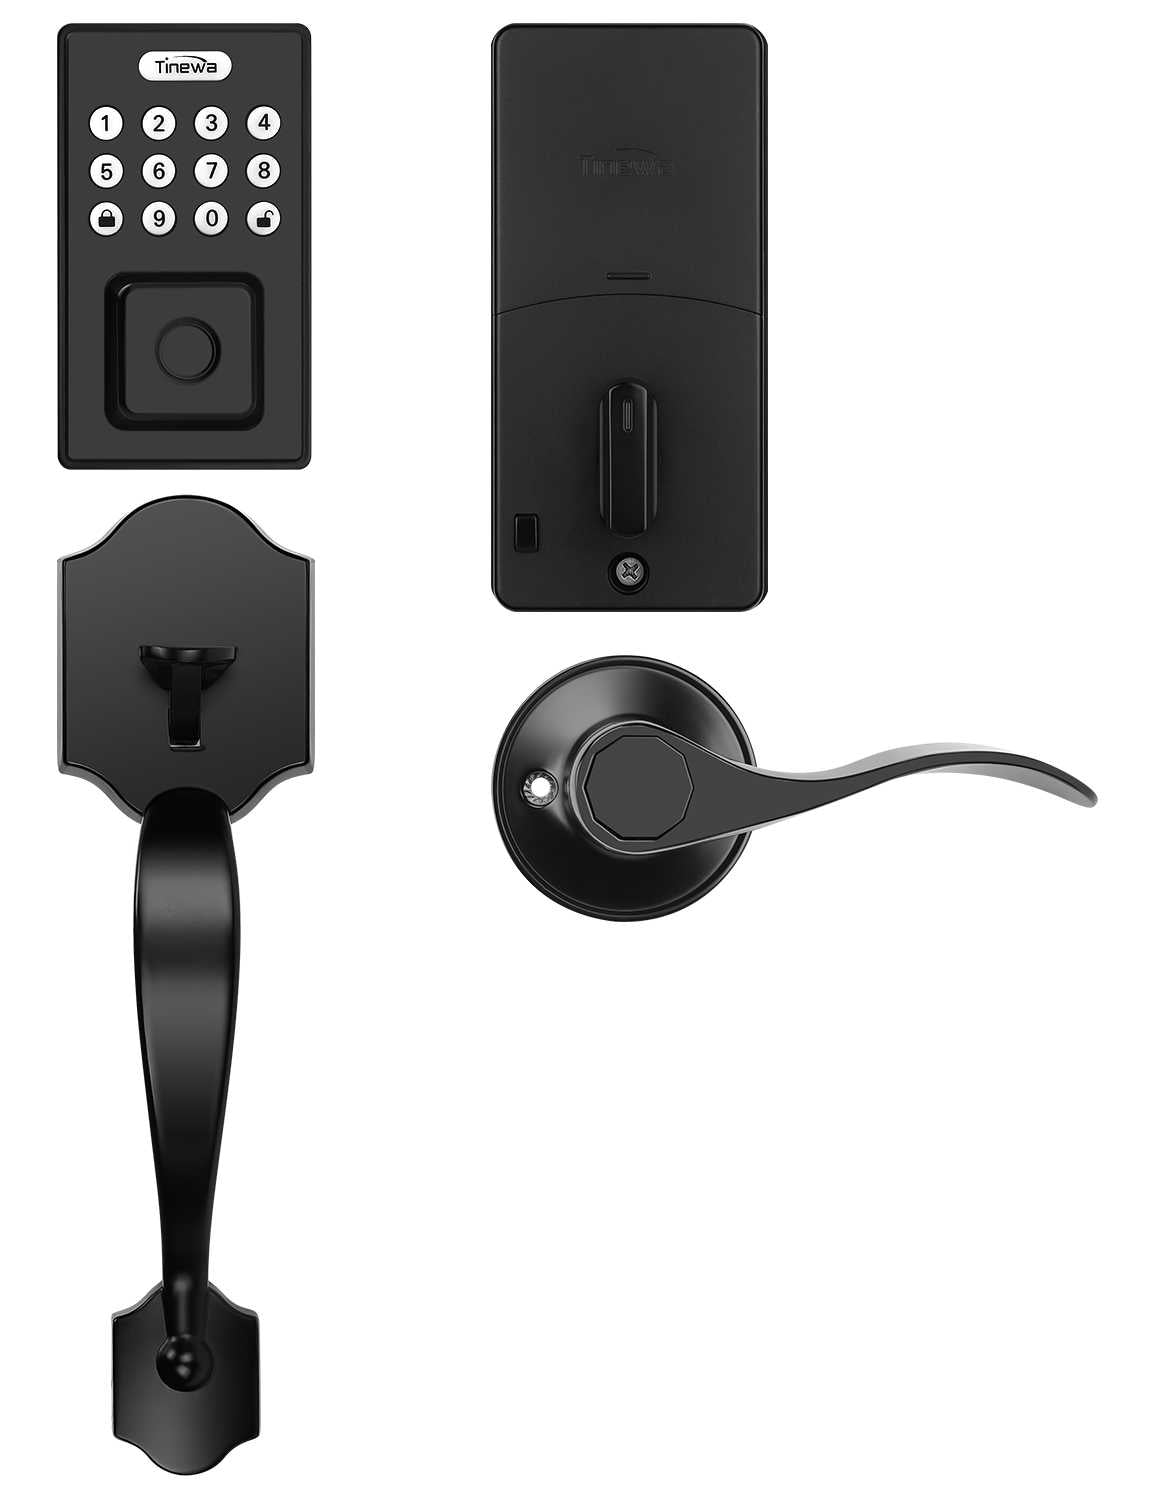 Tinewa Electronic Digital Keypad Deadbolt with Passage Lever, Square Smart Door Lock, Fingerprint Entry Lock, Biometric Front Door Handle Sets for Home & Apartment, Auto Lock, App Control